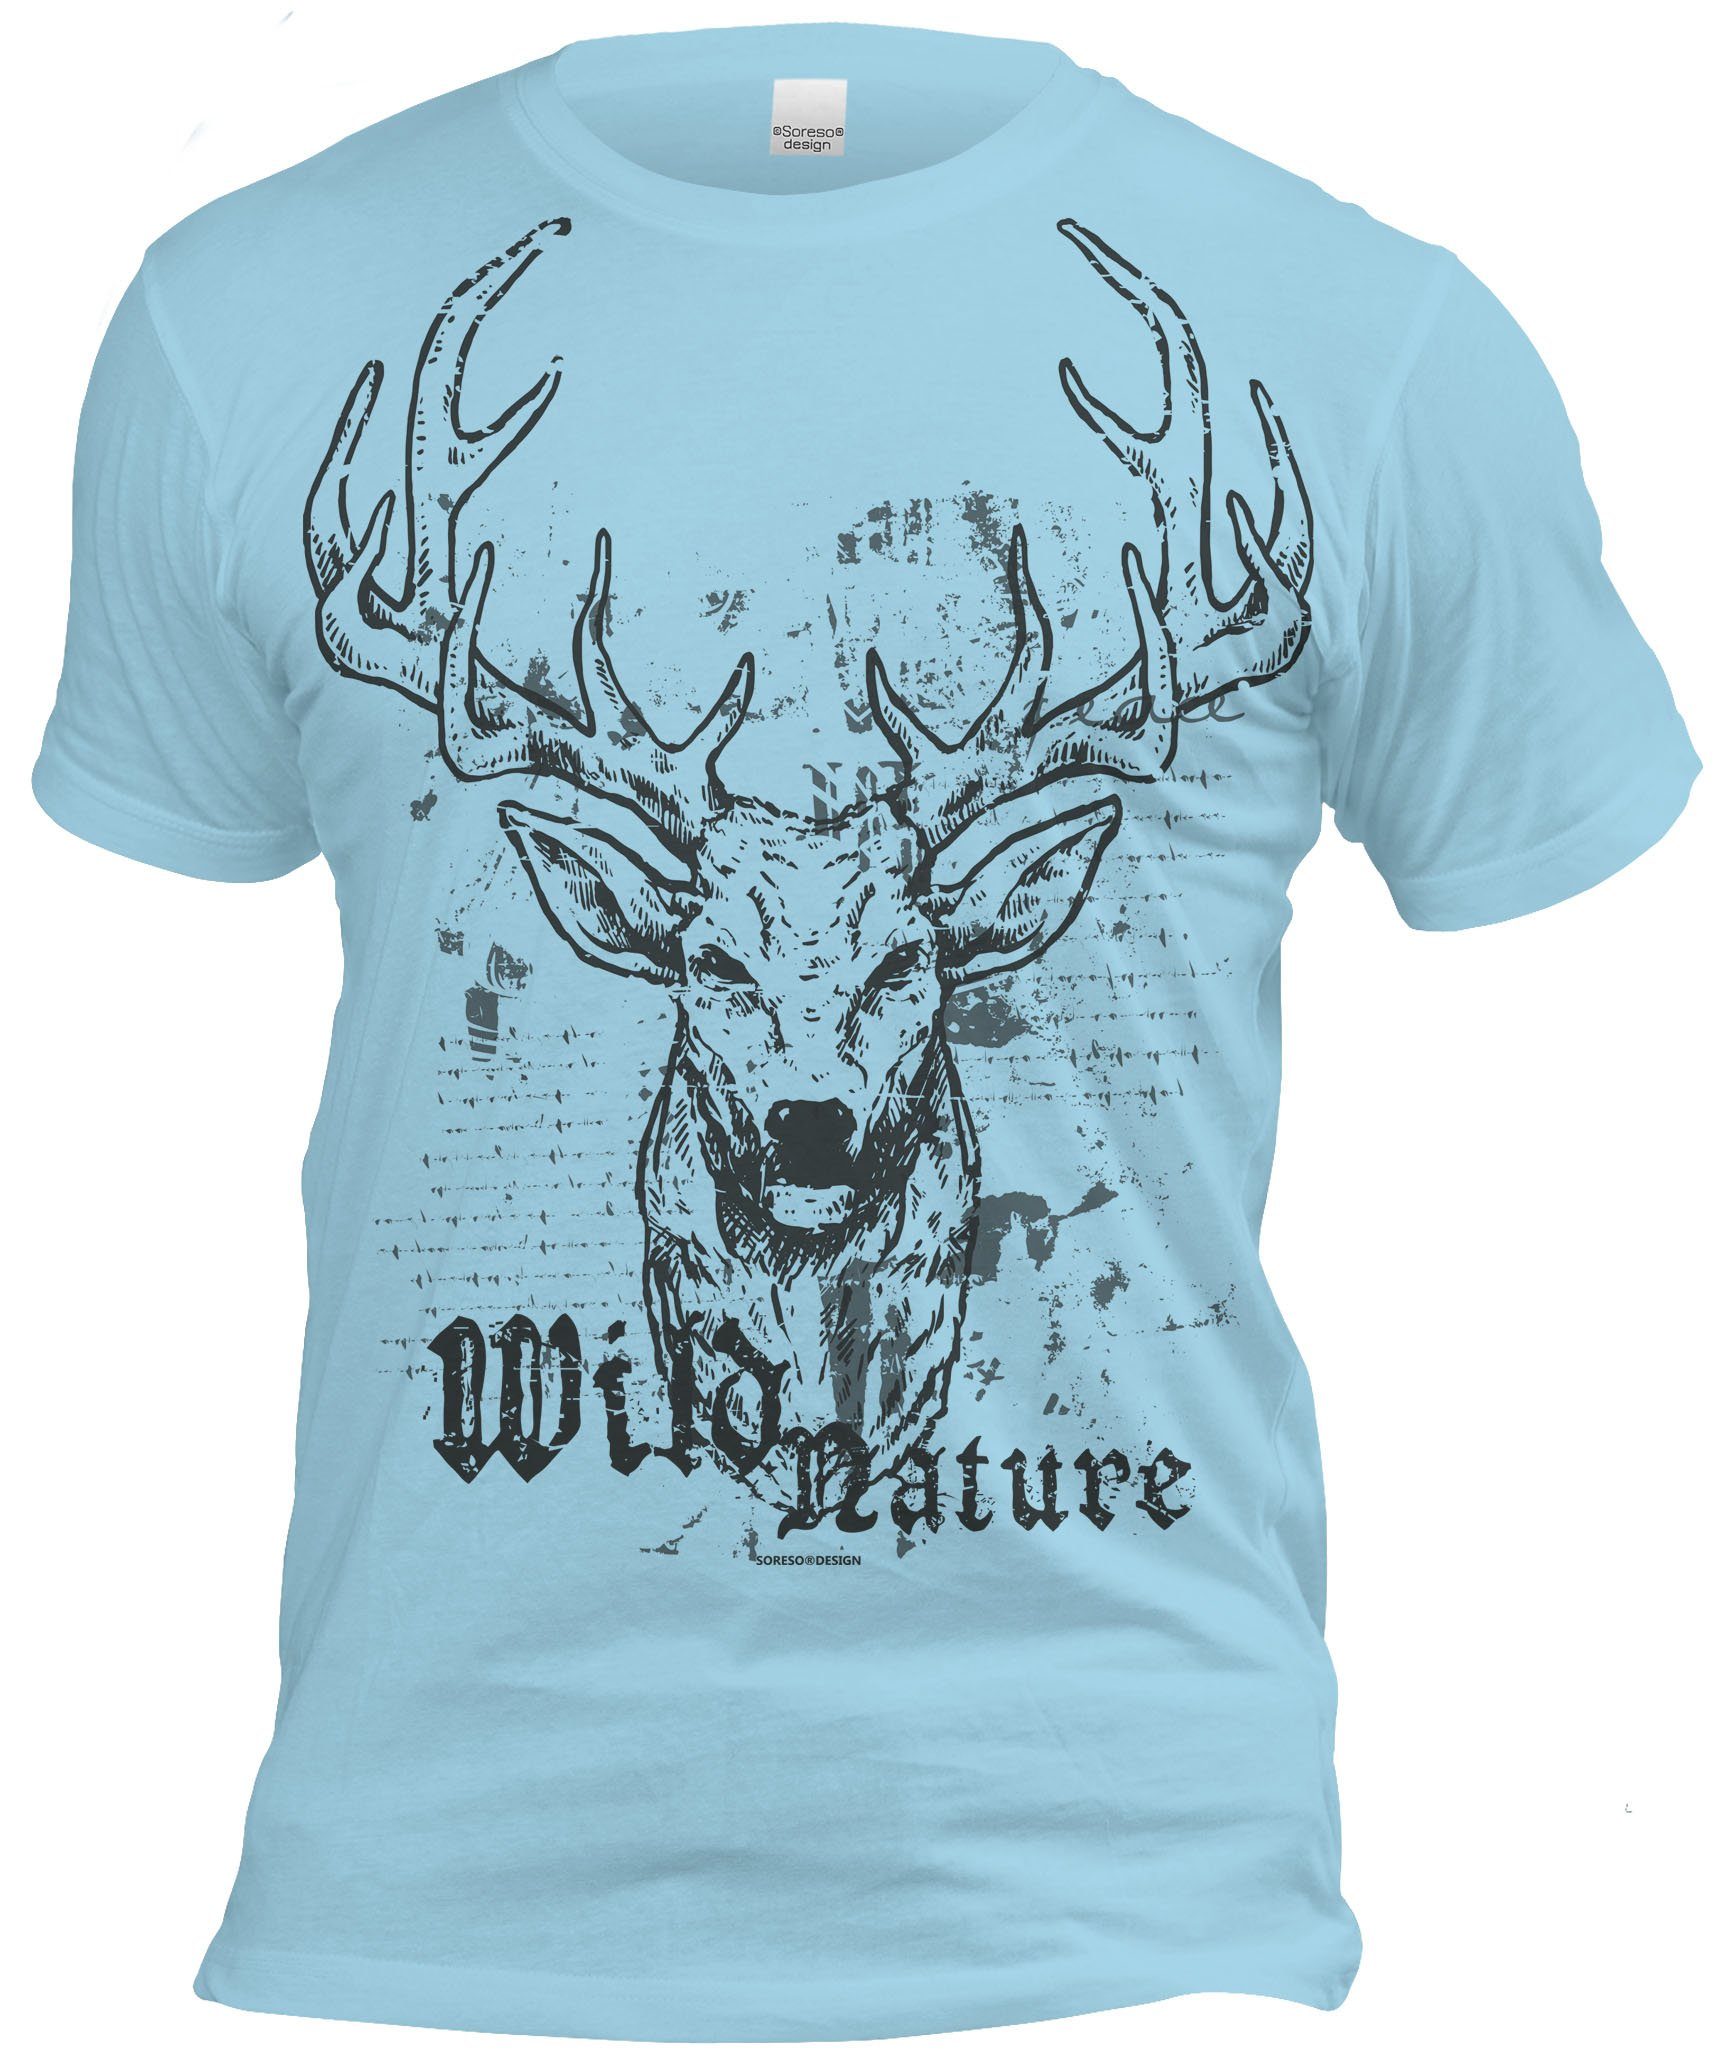 Soreso® T-Shirt Trachtenshirt Wild Nature Herren (Ein T-Shirt) Trachten T-Shirt Männer hellblau